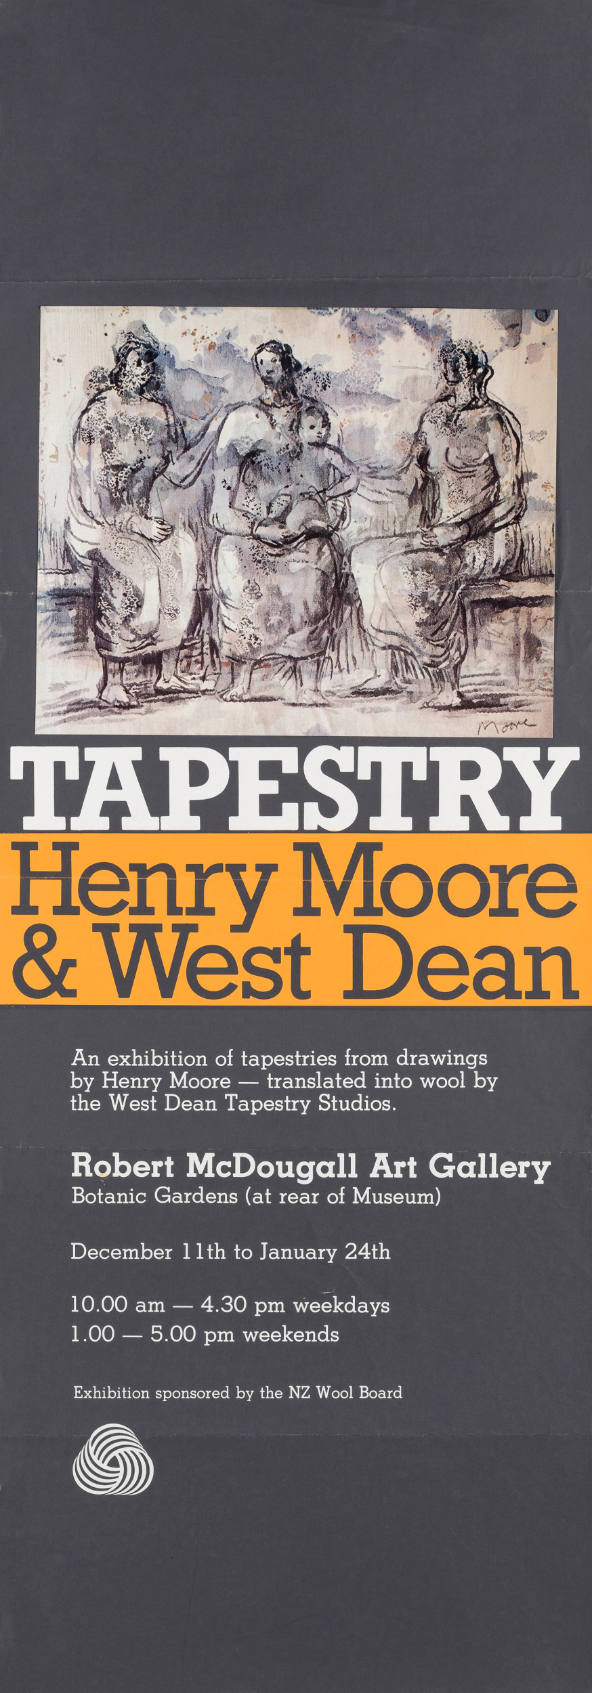 TAPESTRY
Henry Moore & West Dean